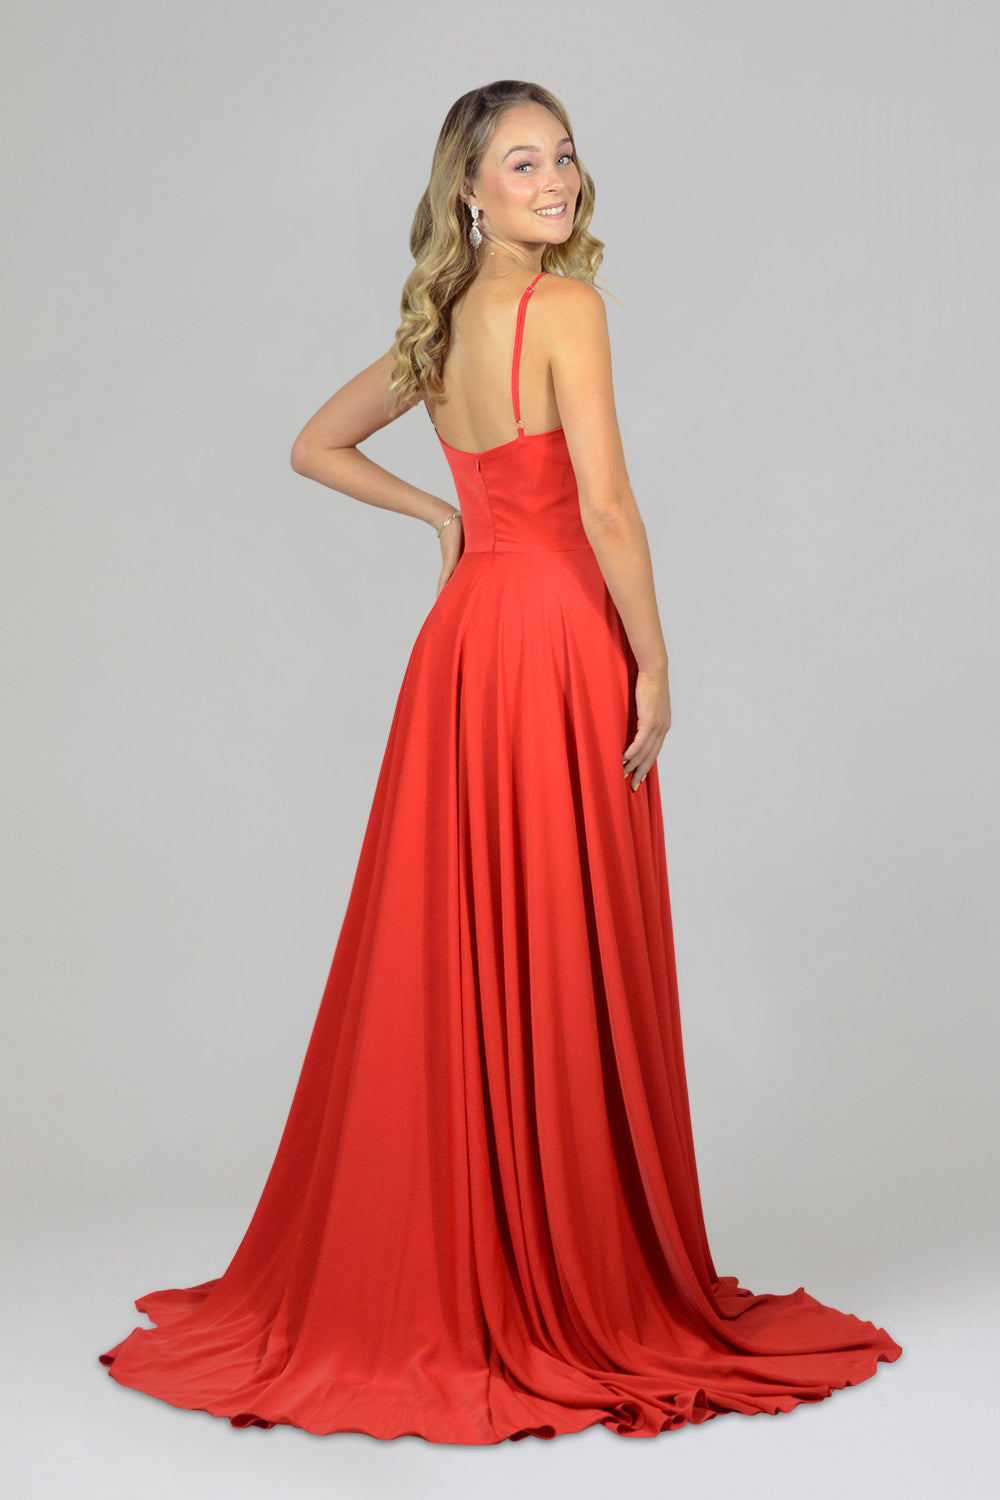 custom made red bridesmaid dresses australia online envious bridal & formal